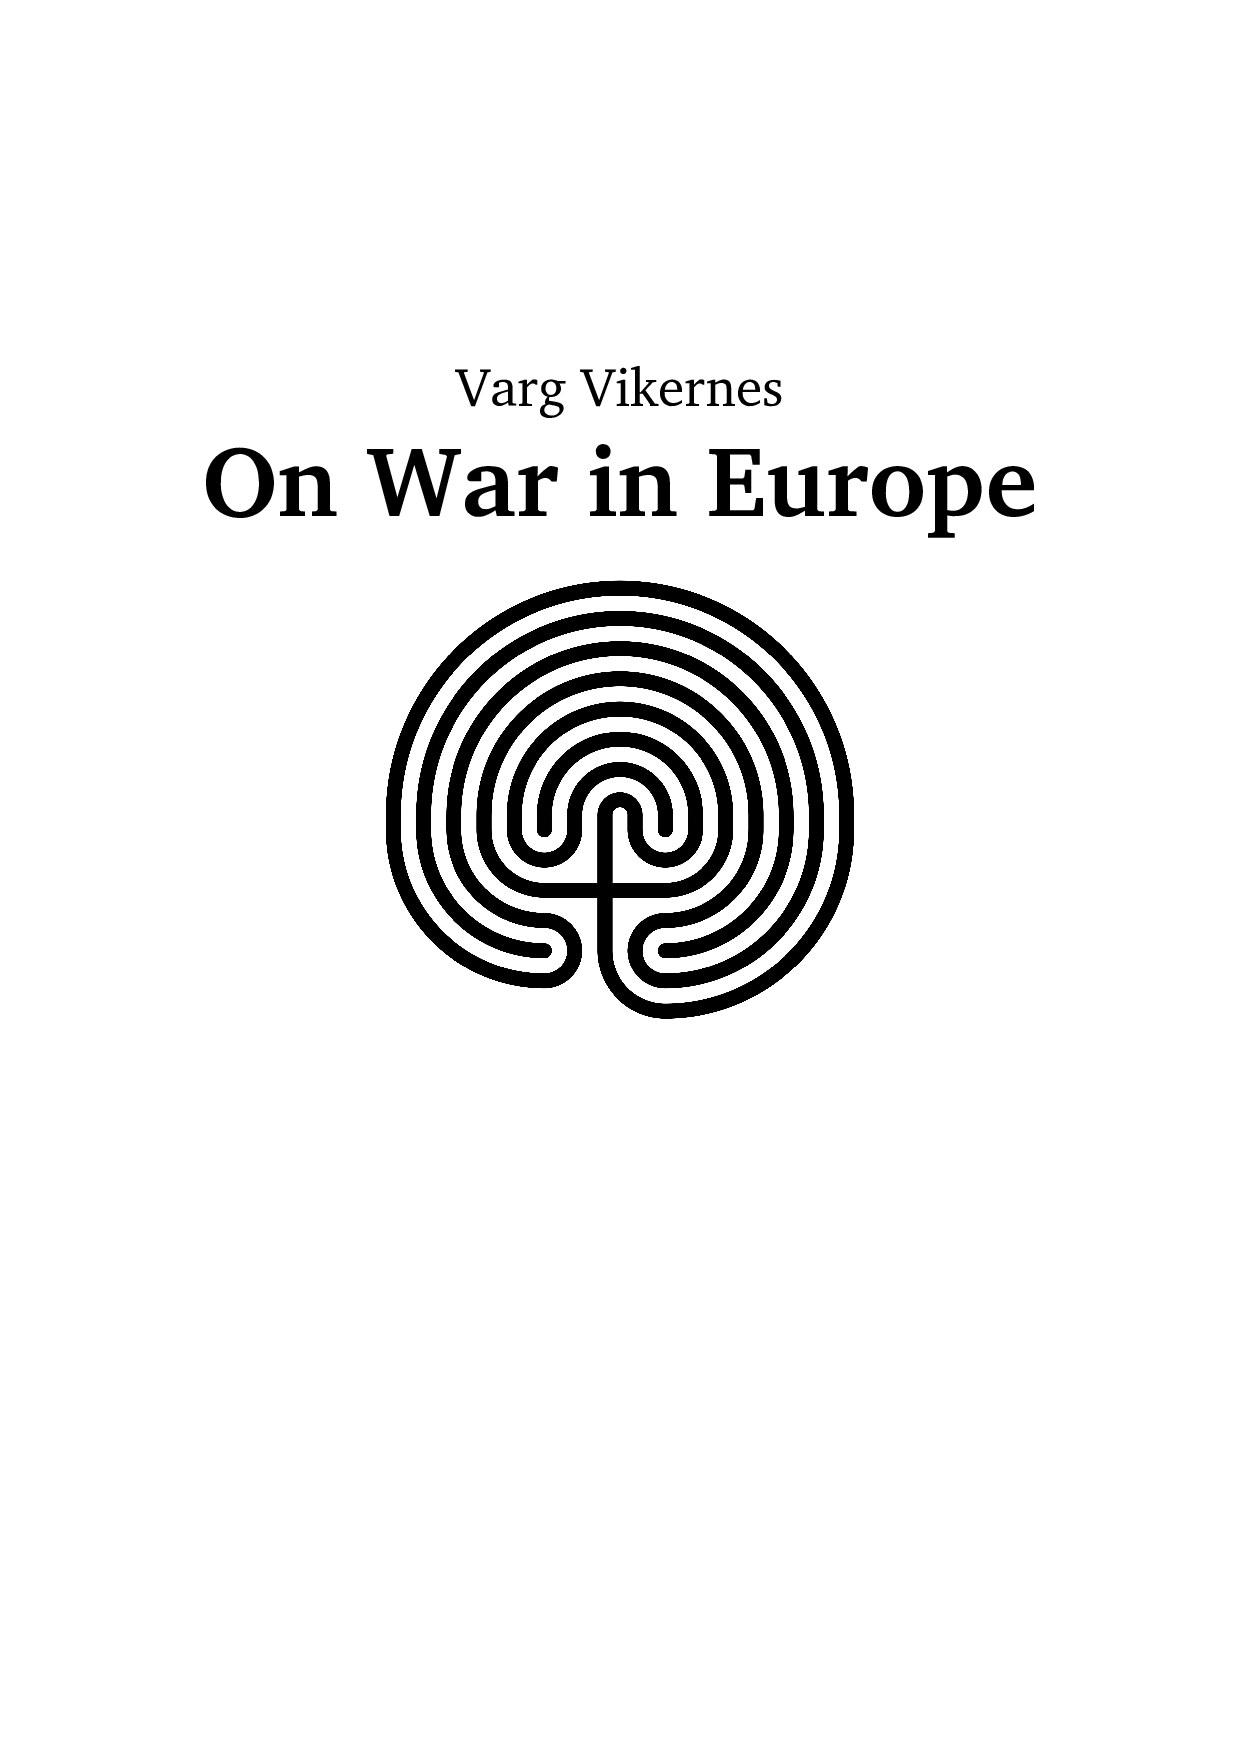 On War in Europe